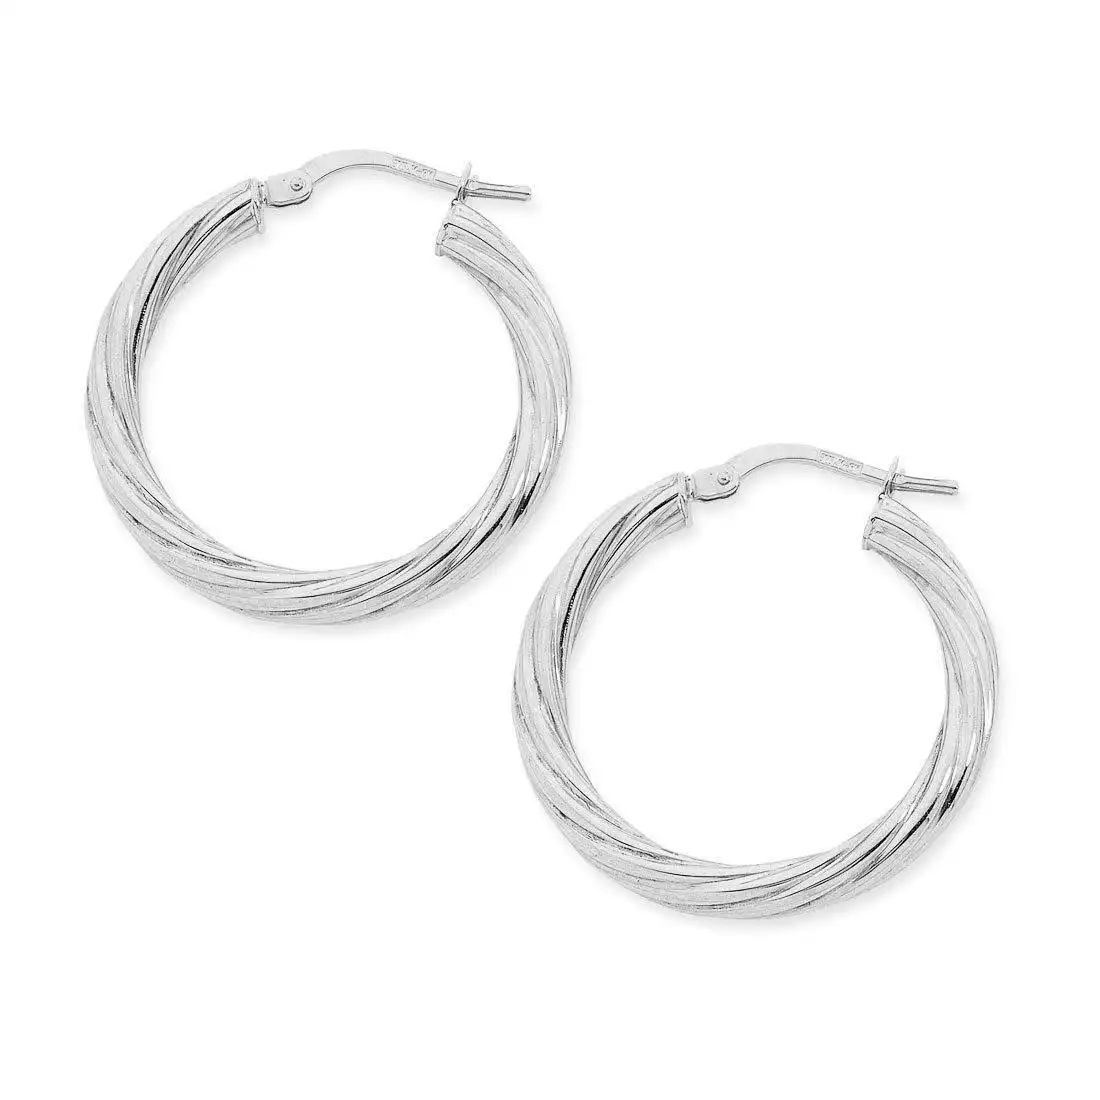 9ct White Gold Silver Infused Twist Hoop Earrings 2mm x 30mm